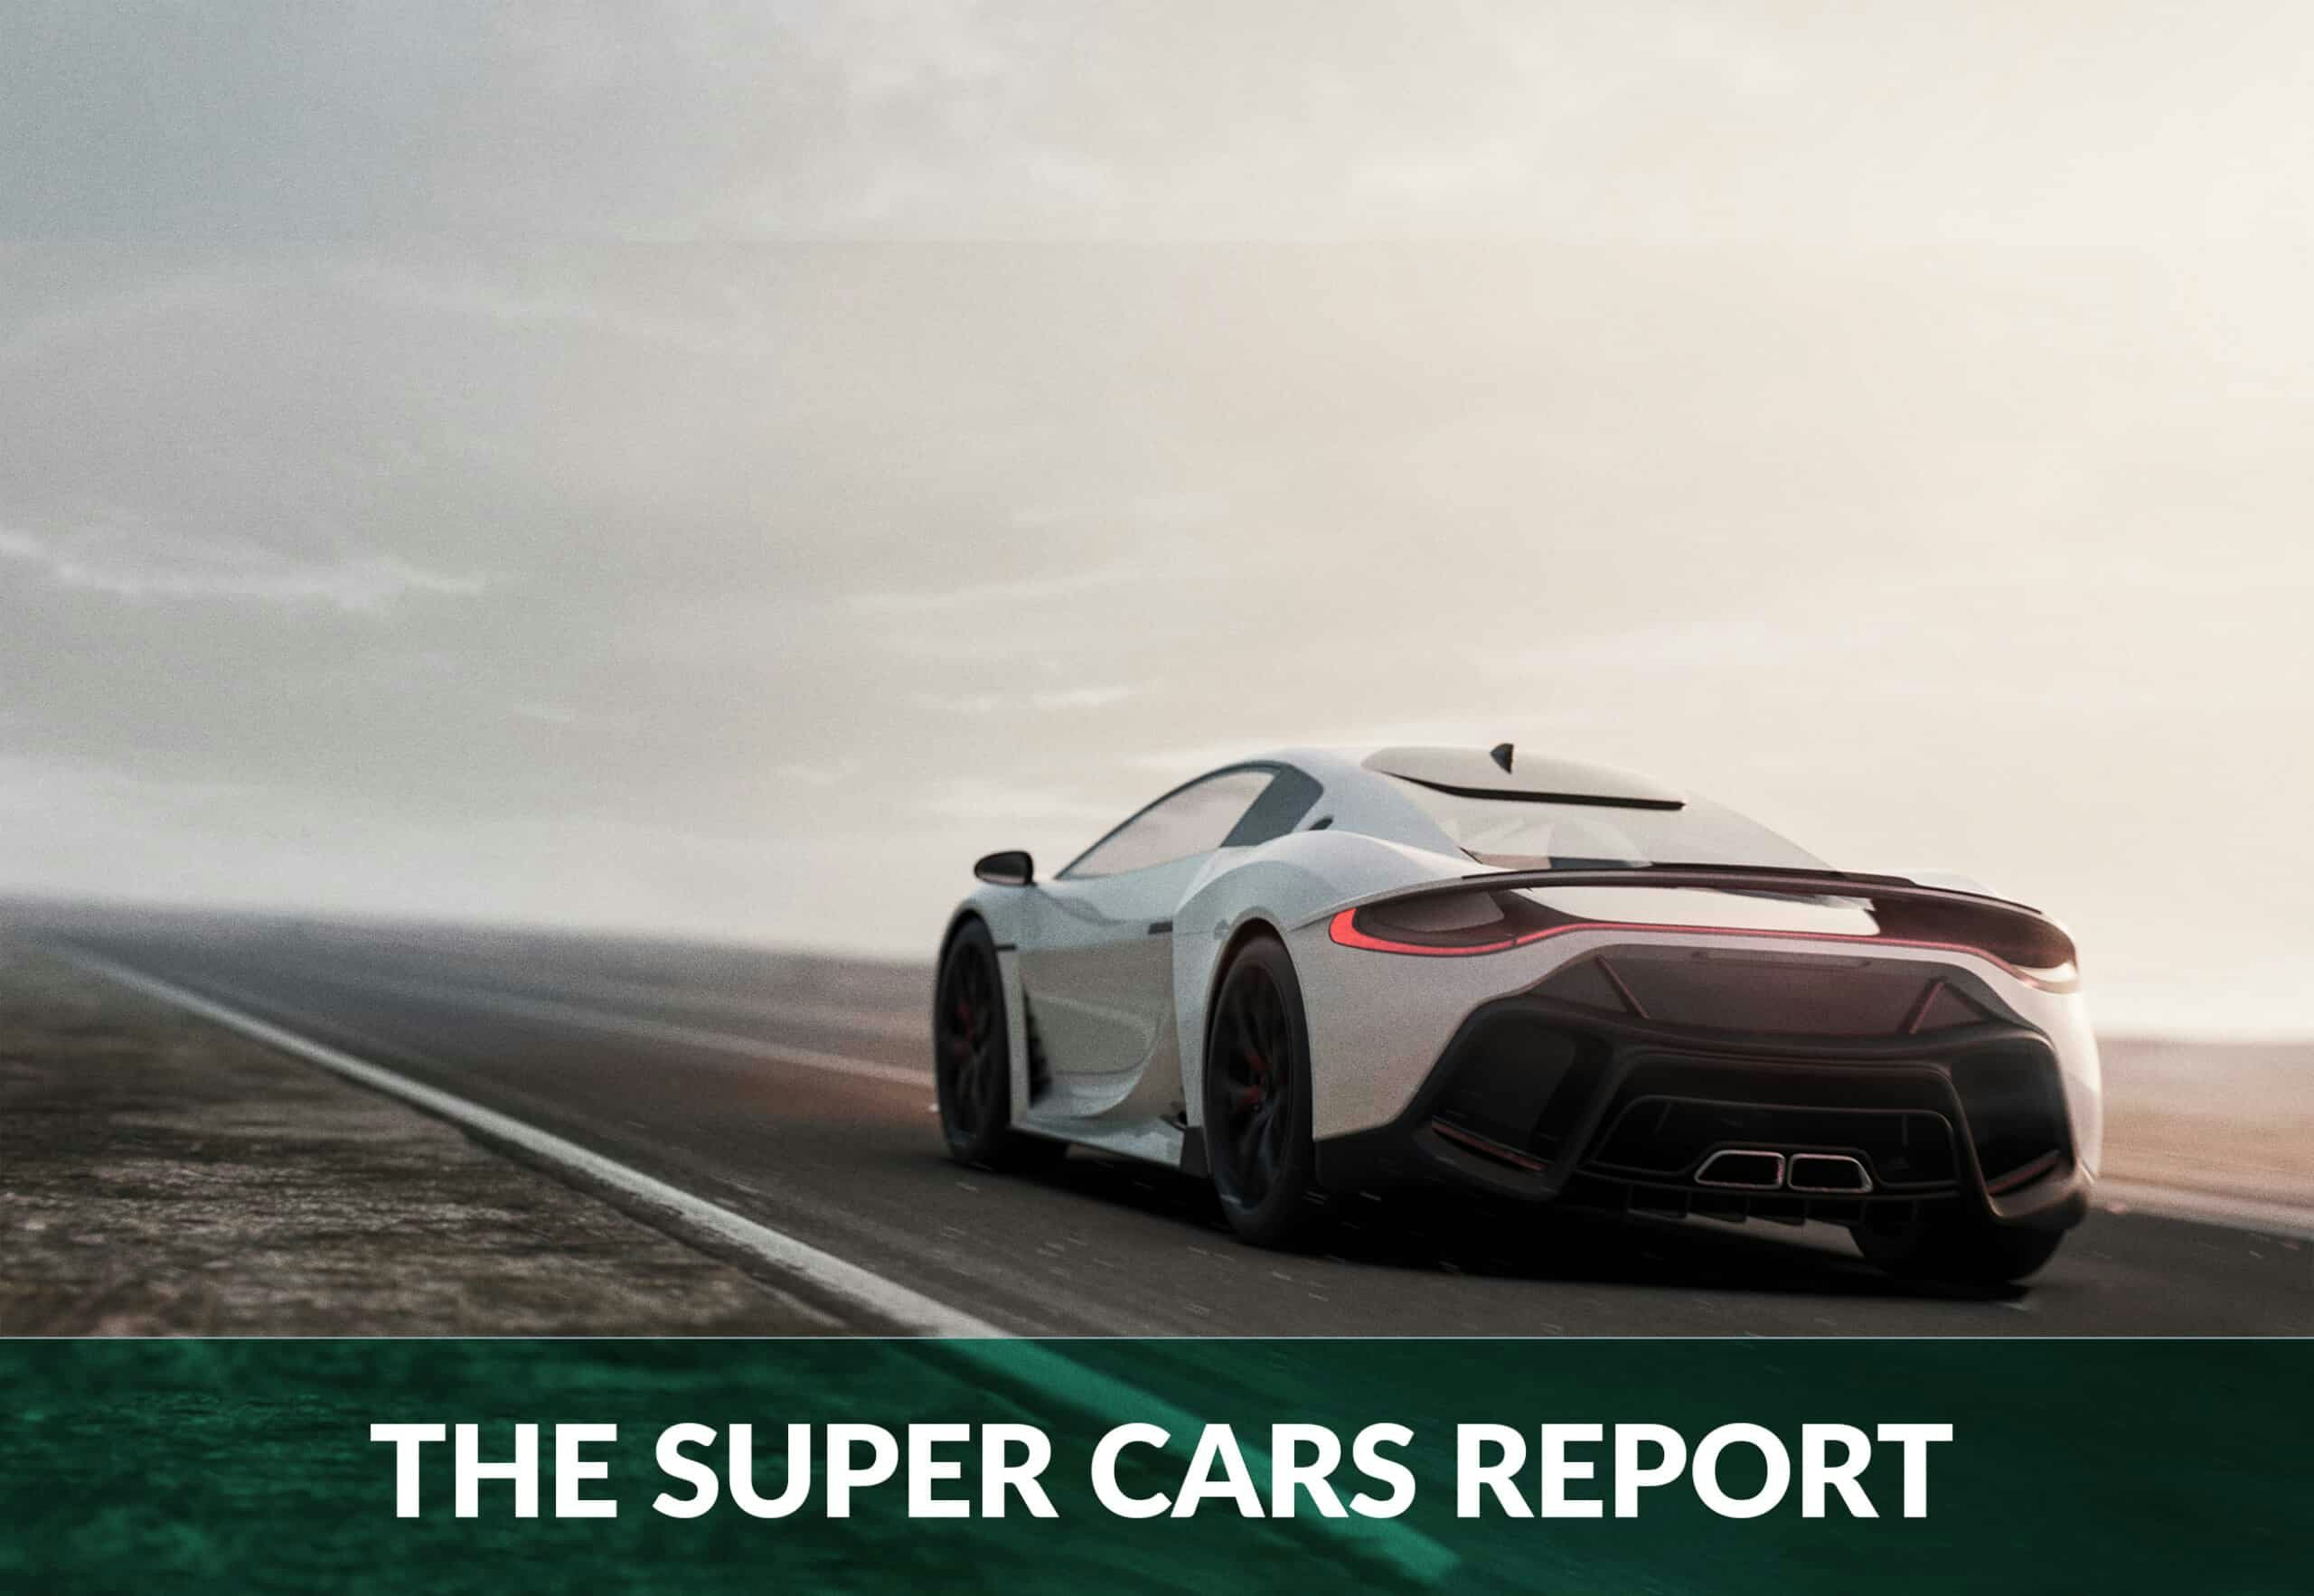 The super cars report